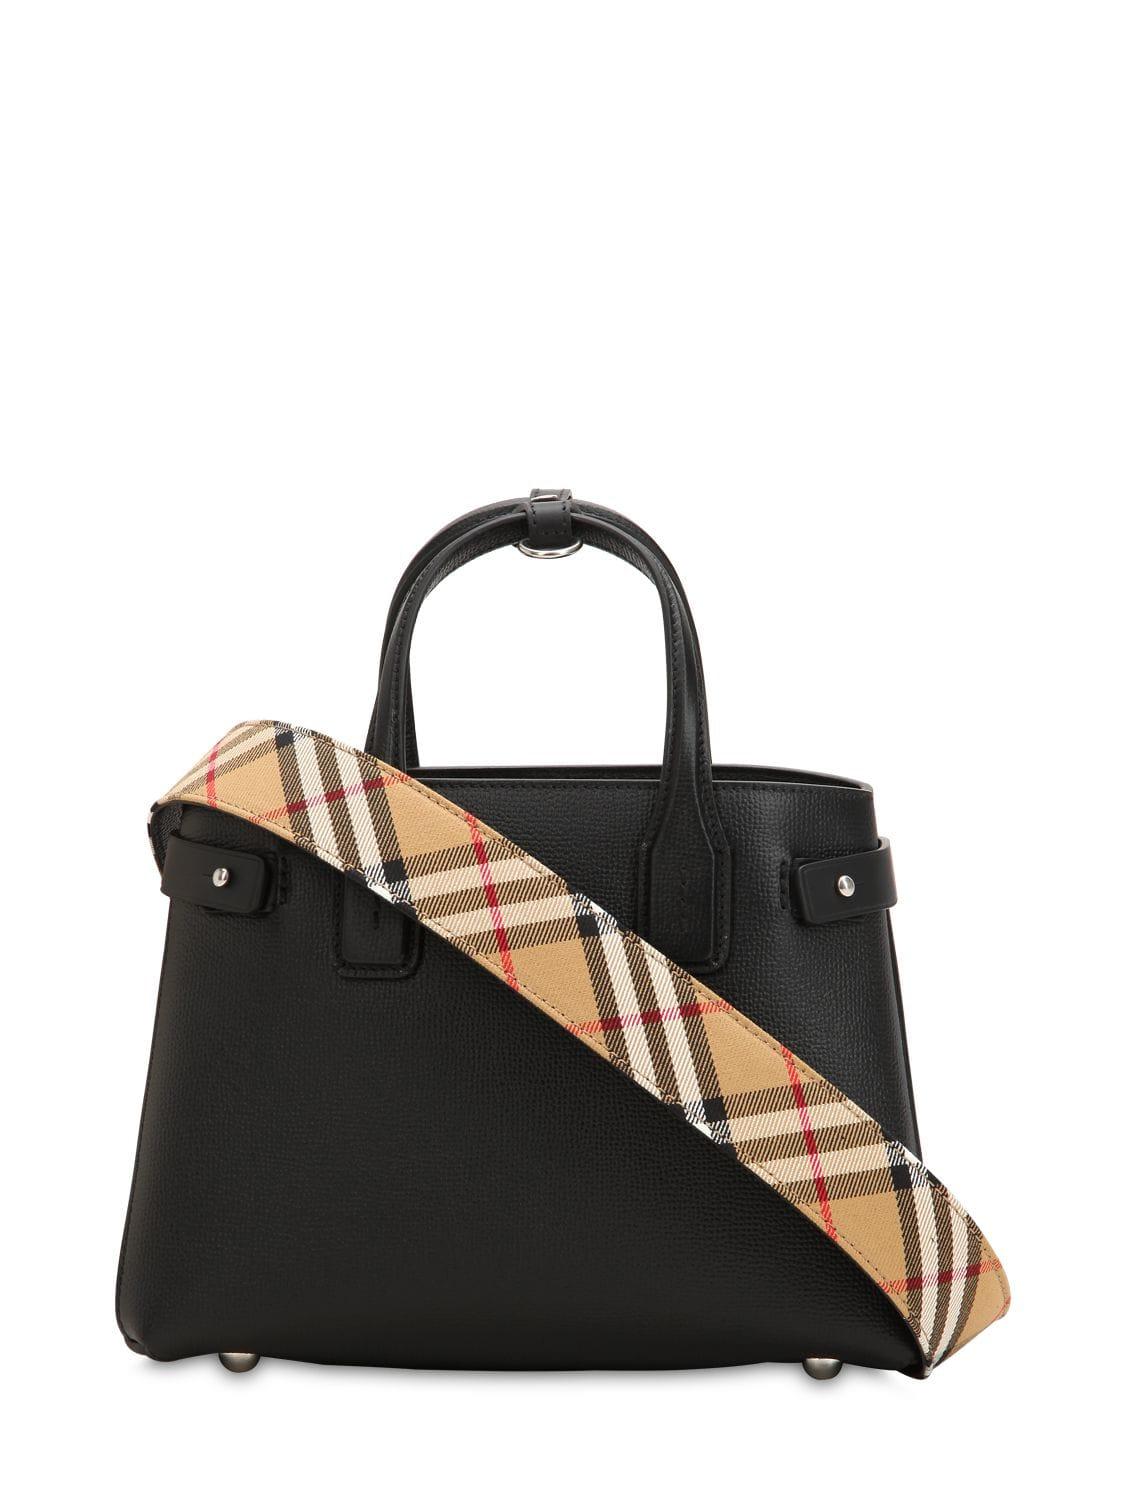 Burberry Thick Strap Bag Sale, SAVE 45% - horiconphoenix.com